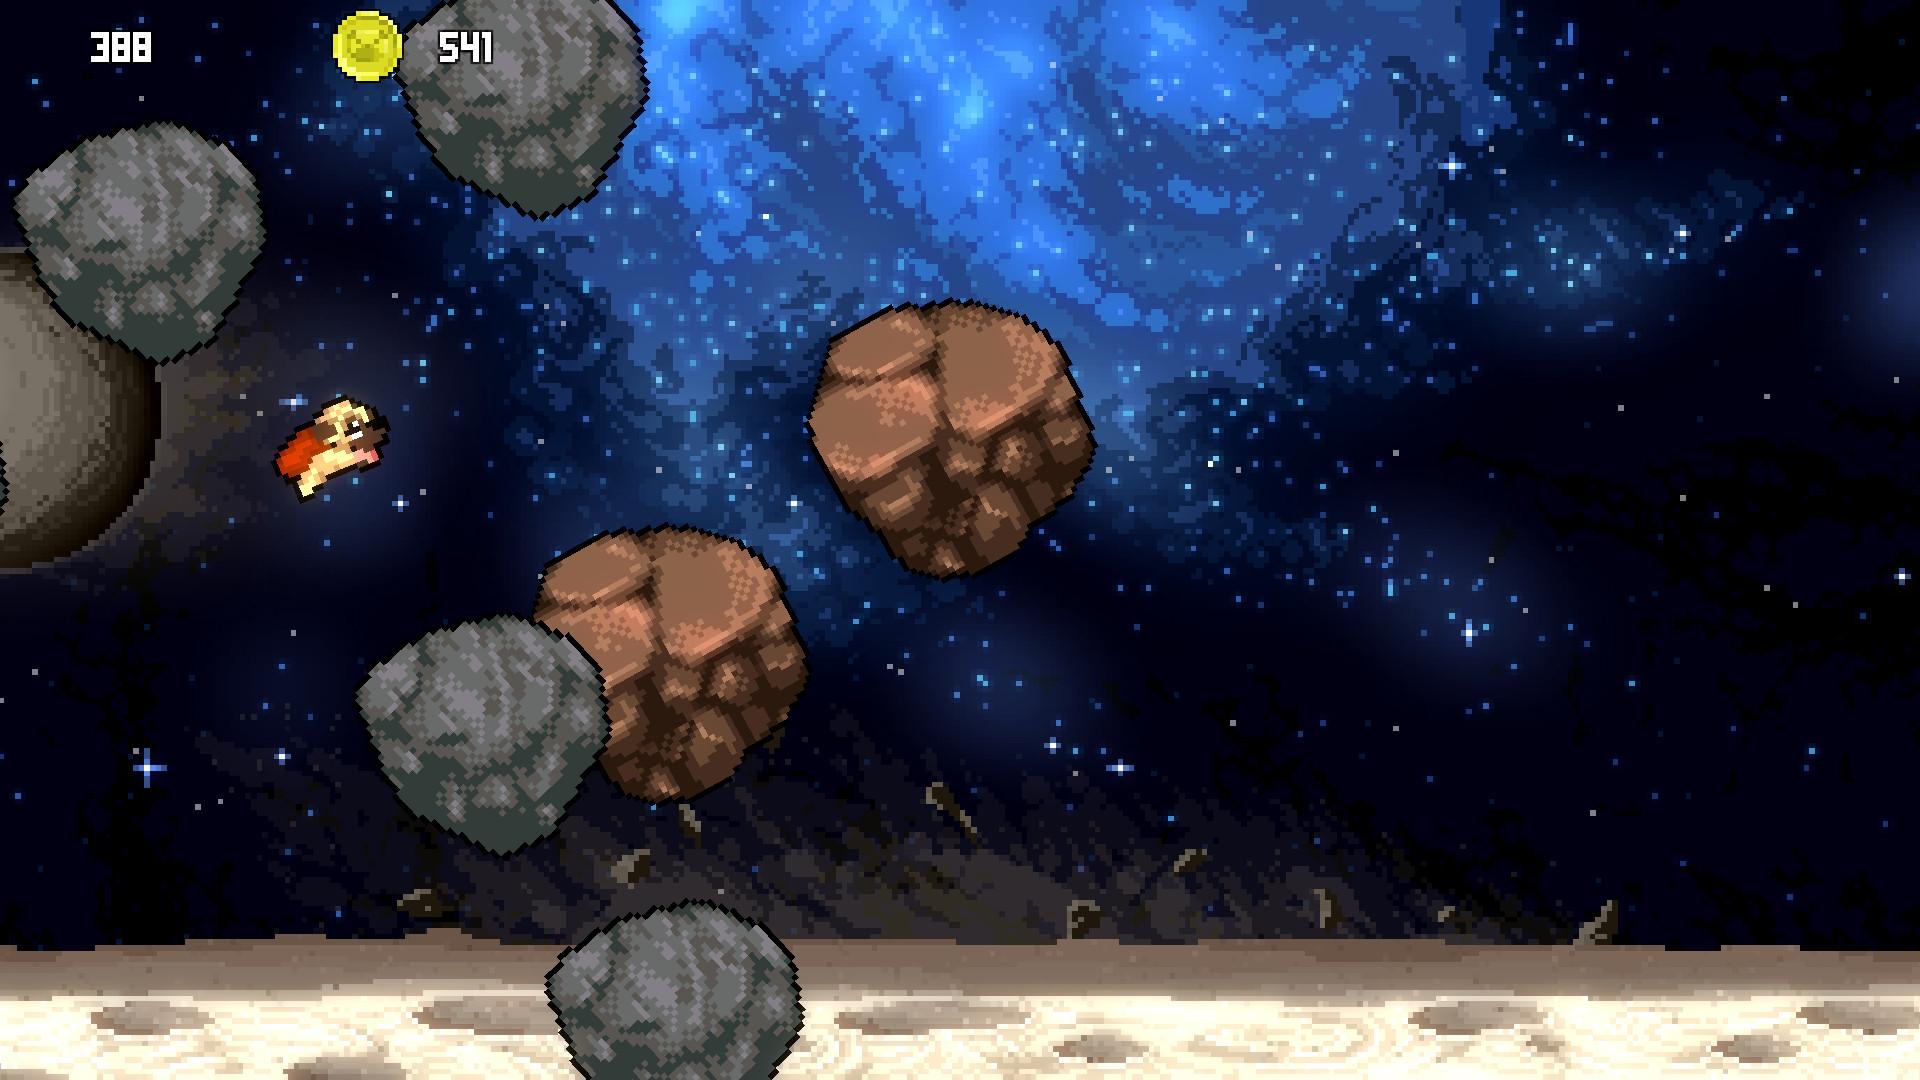 Screenshot №8 from game Super Mega Neo Pug